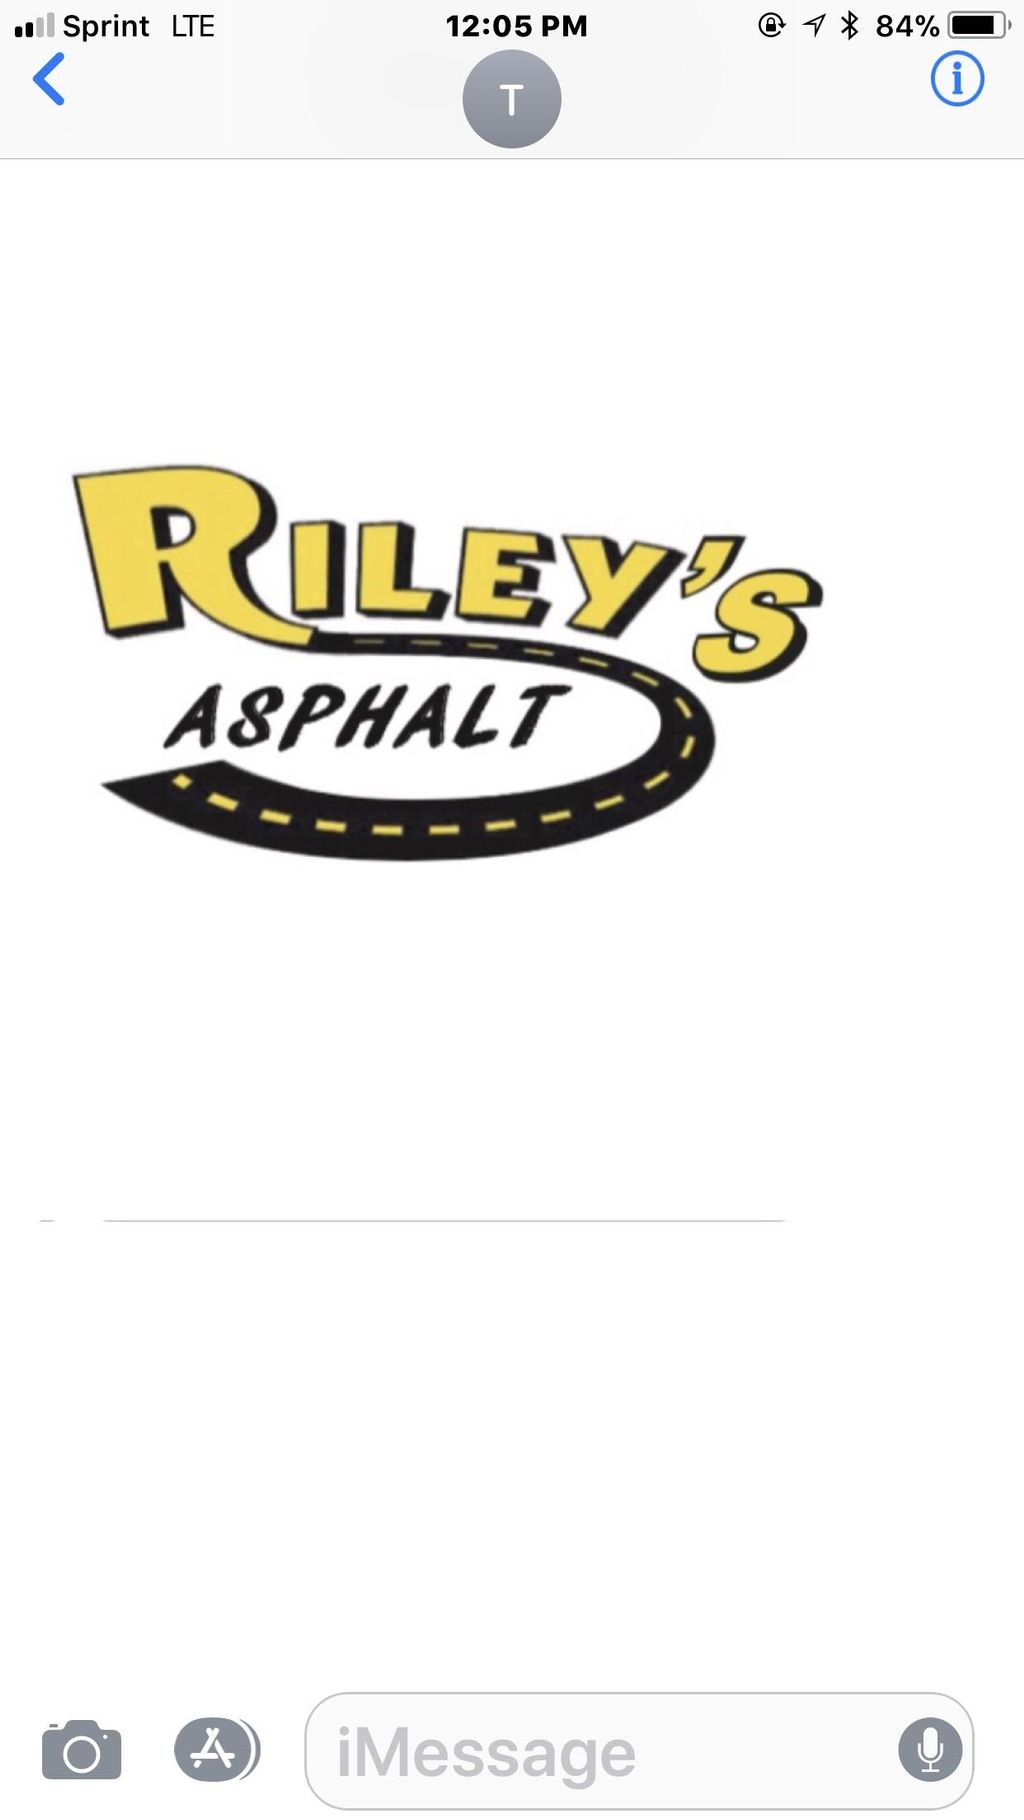 Riley”s asphalt